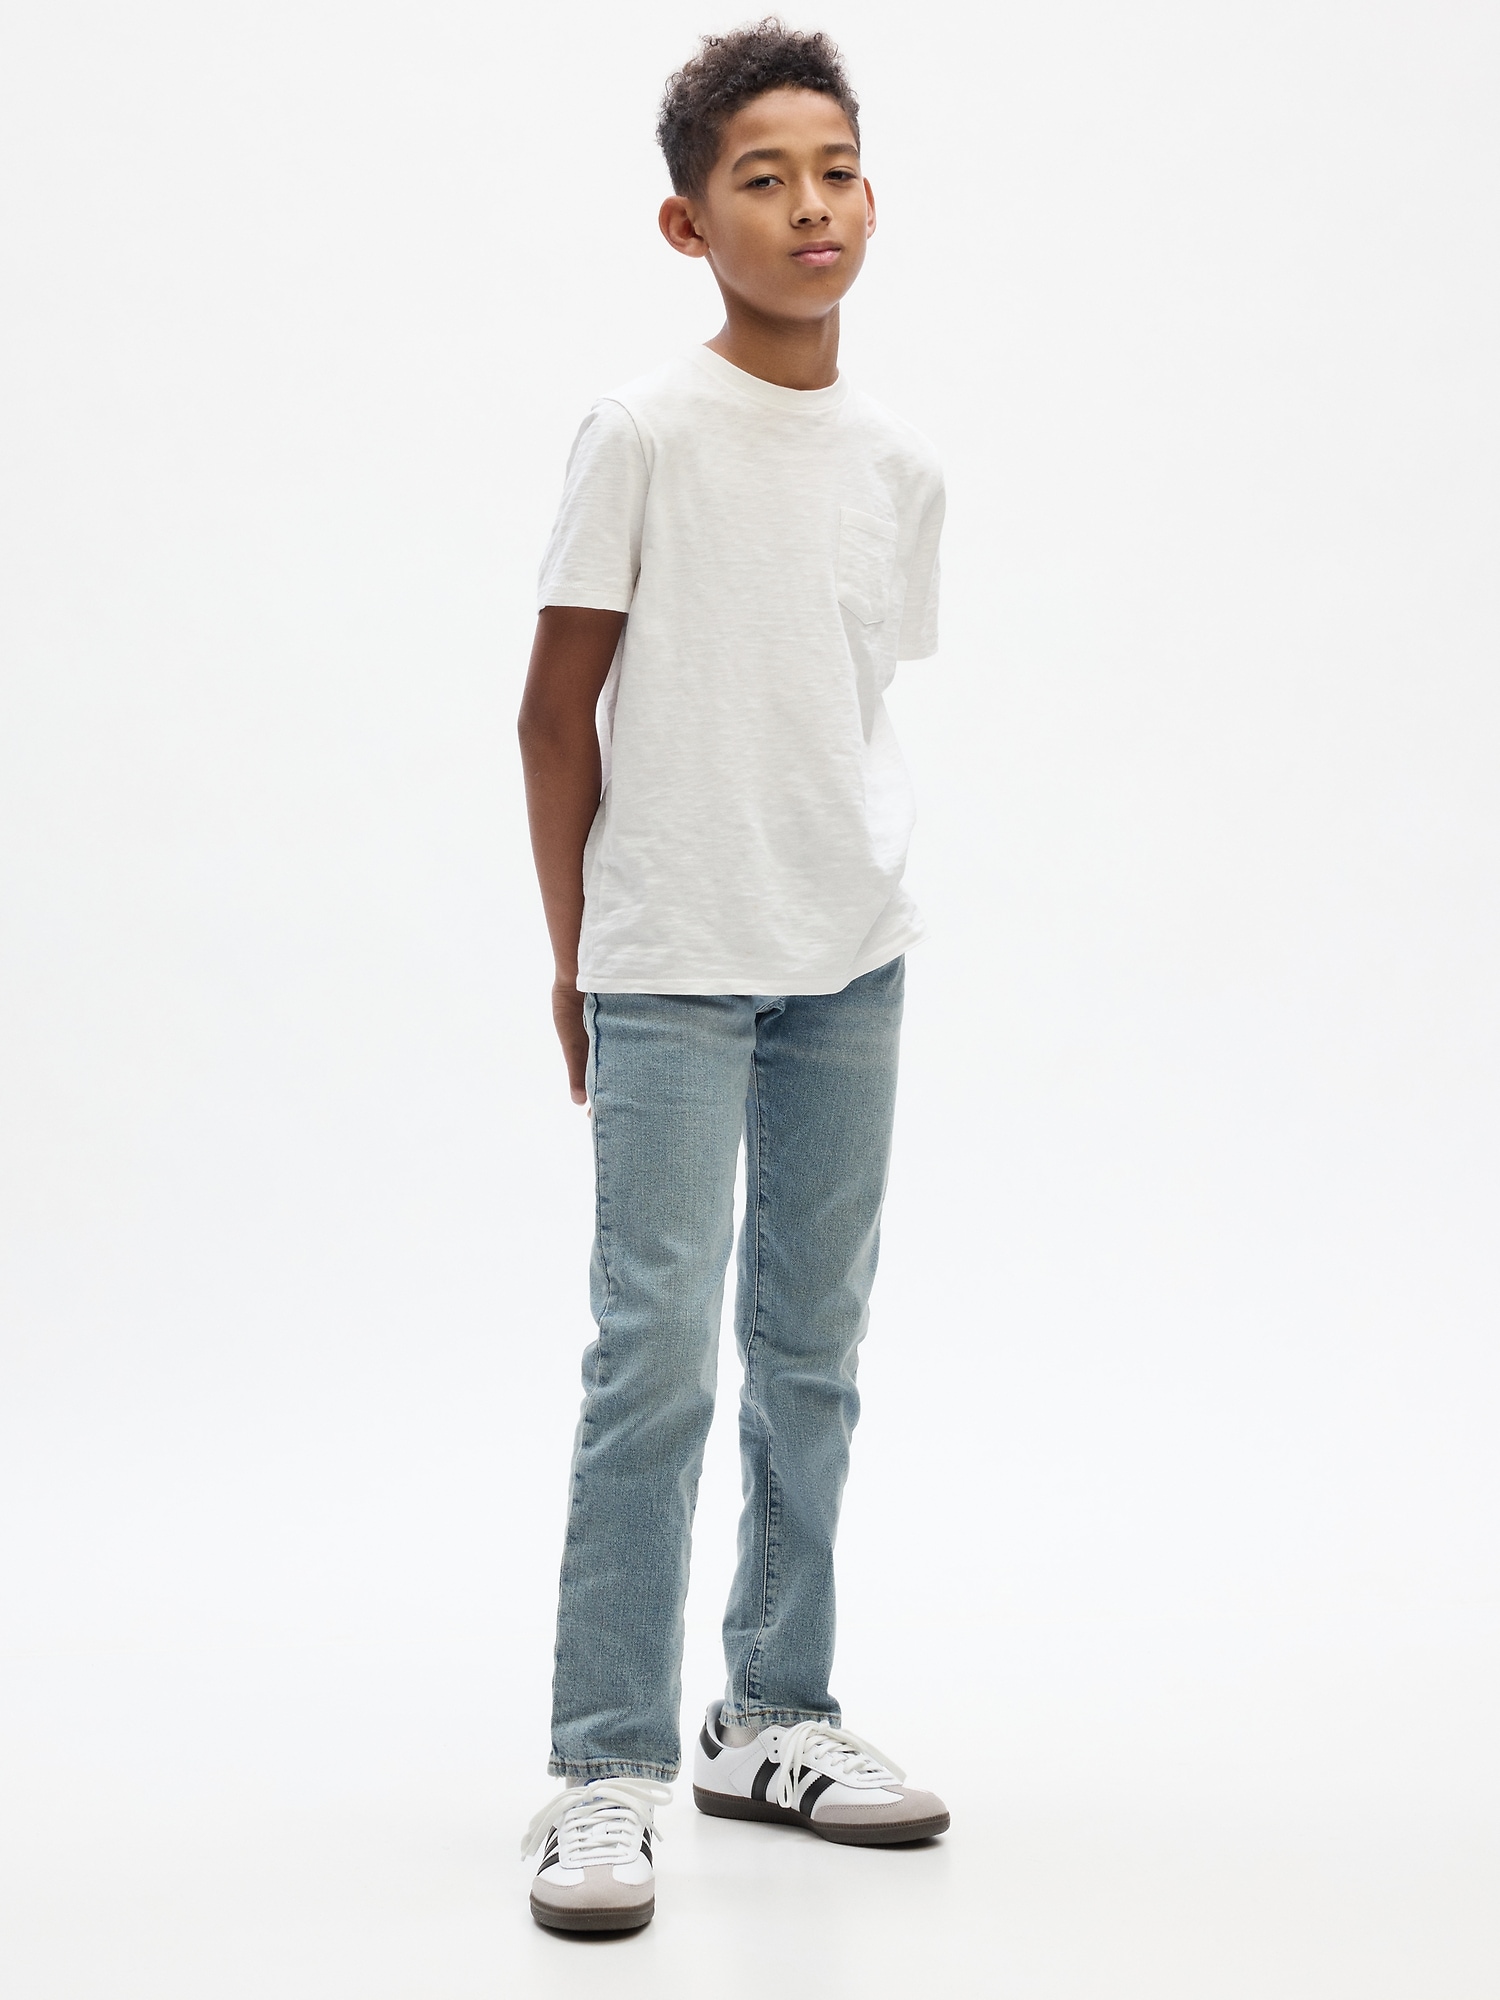 Kids Slim Jeans | Gap